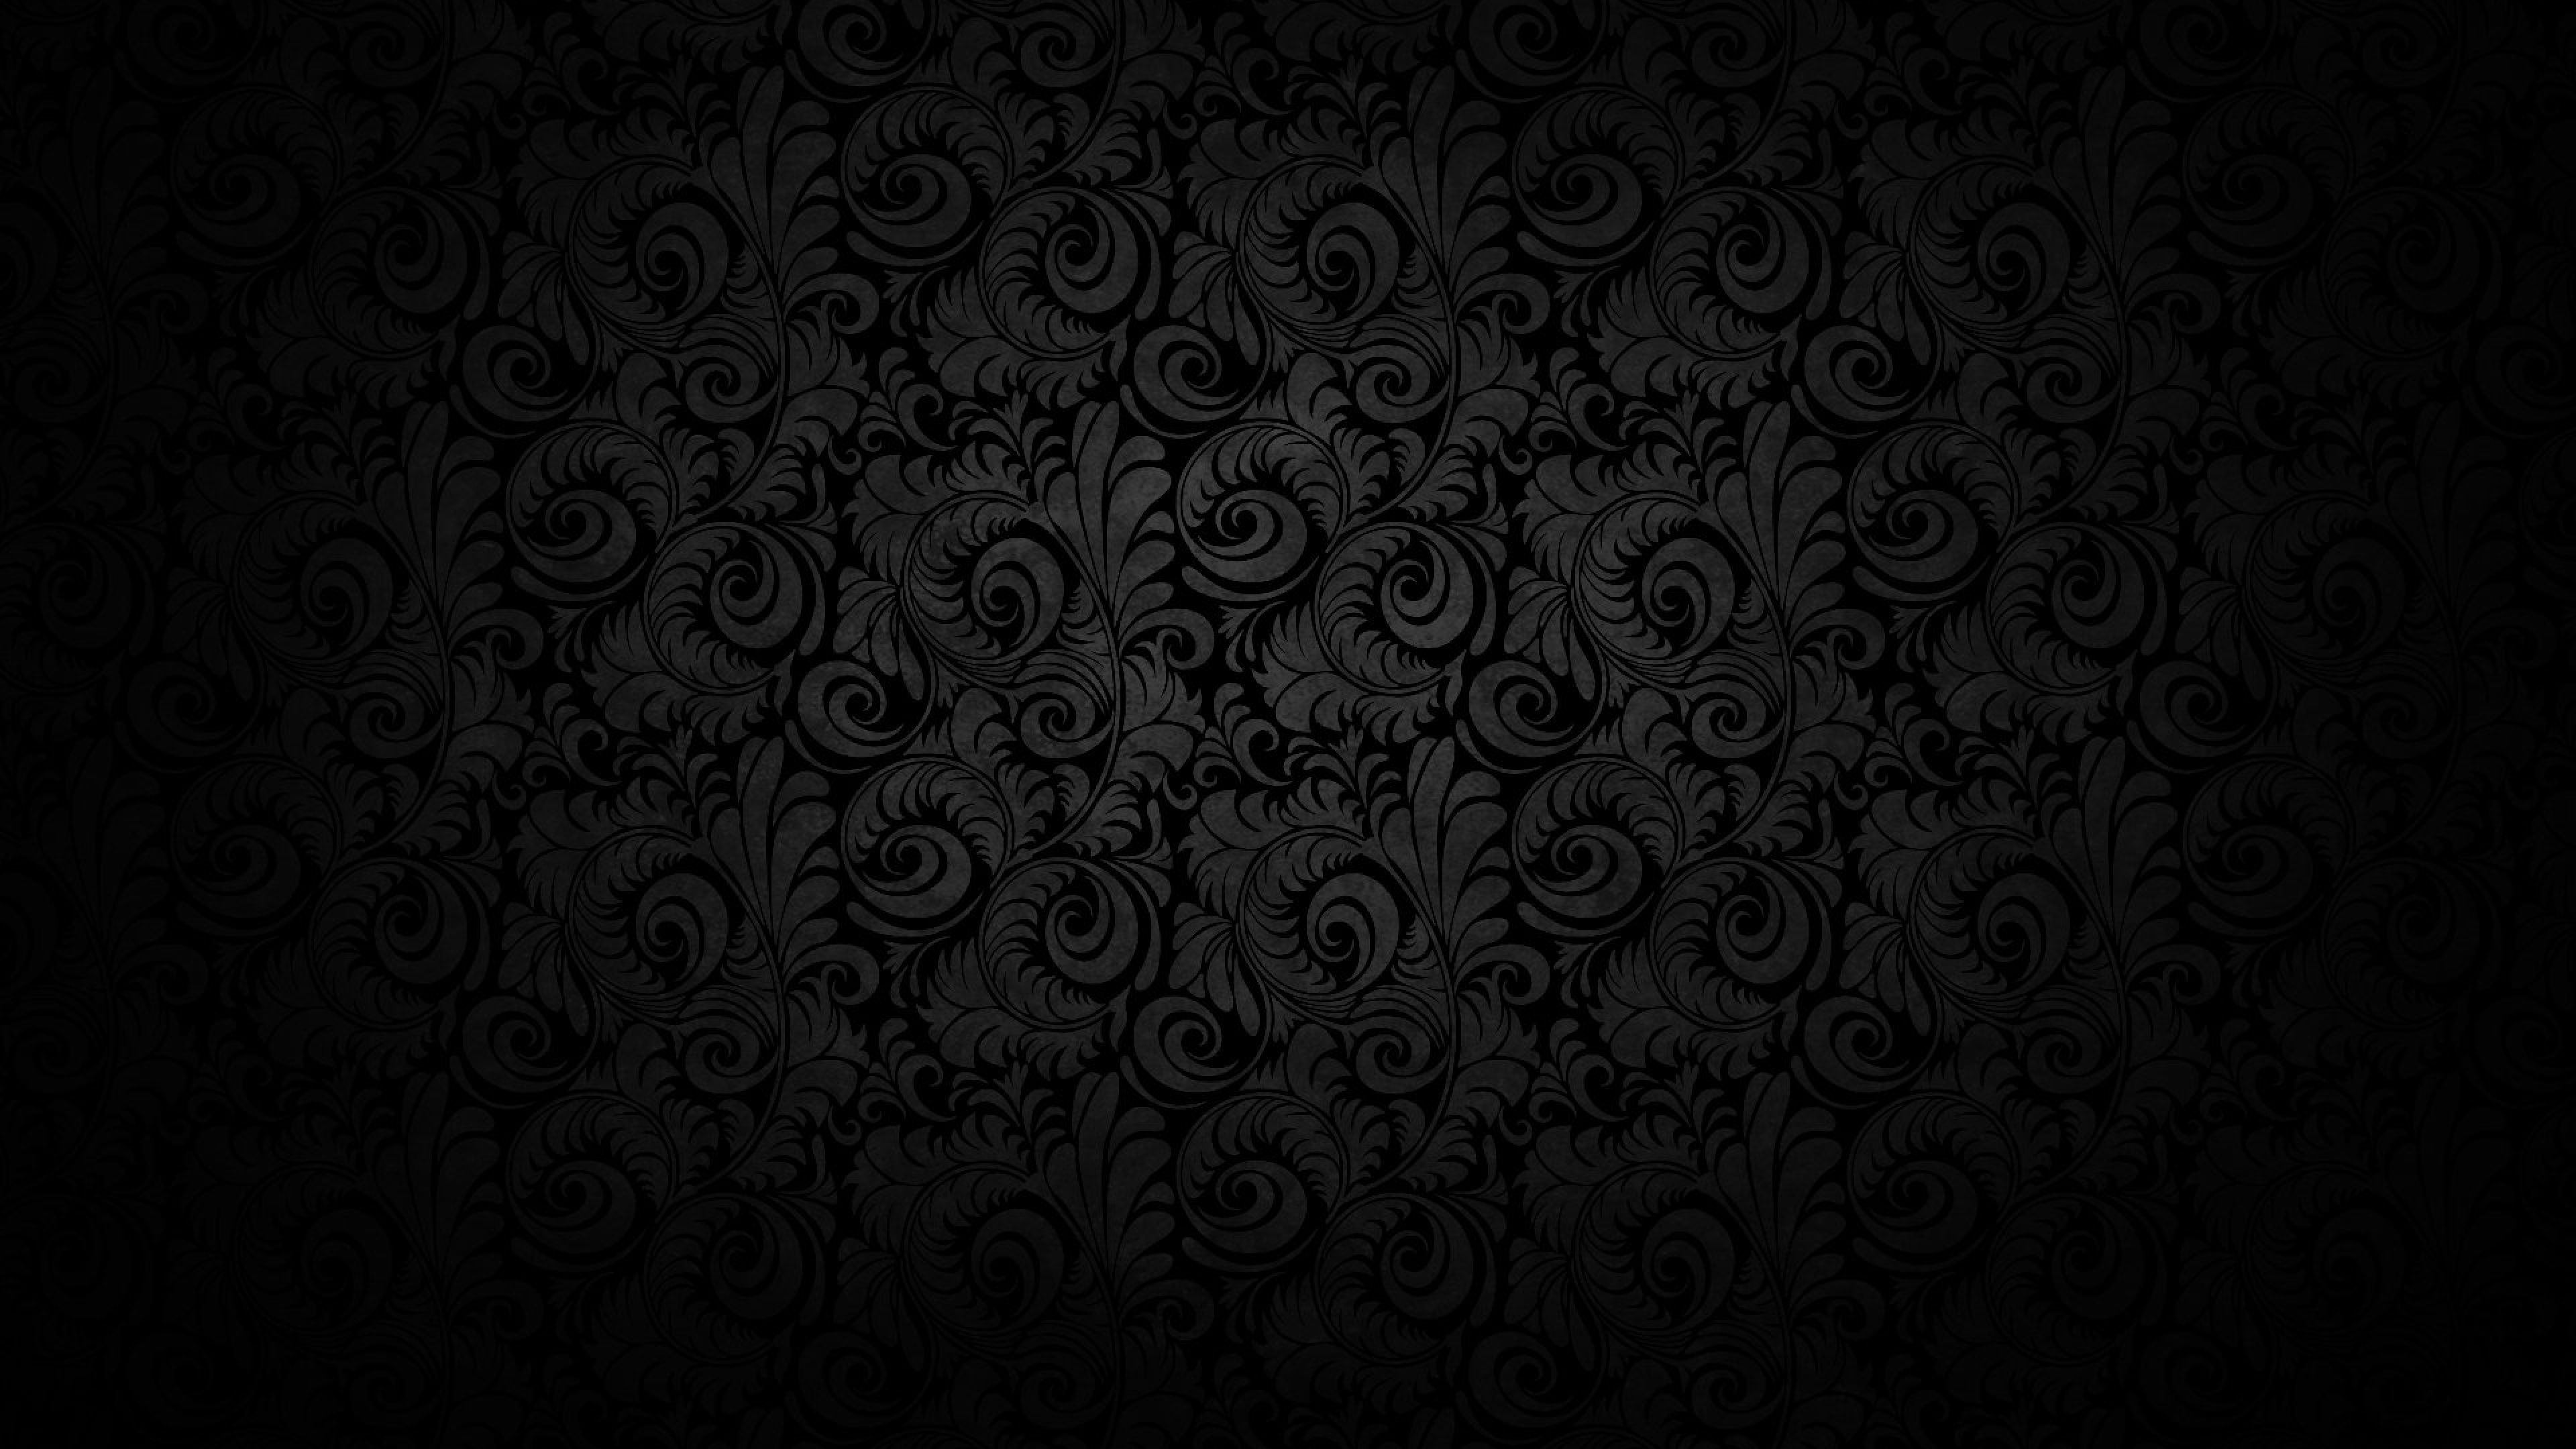 Obsidian darkness, Noir mystery, Dark elegance, Shadowy world, Black panther, 3840x2160 4K Desktop